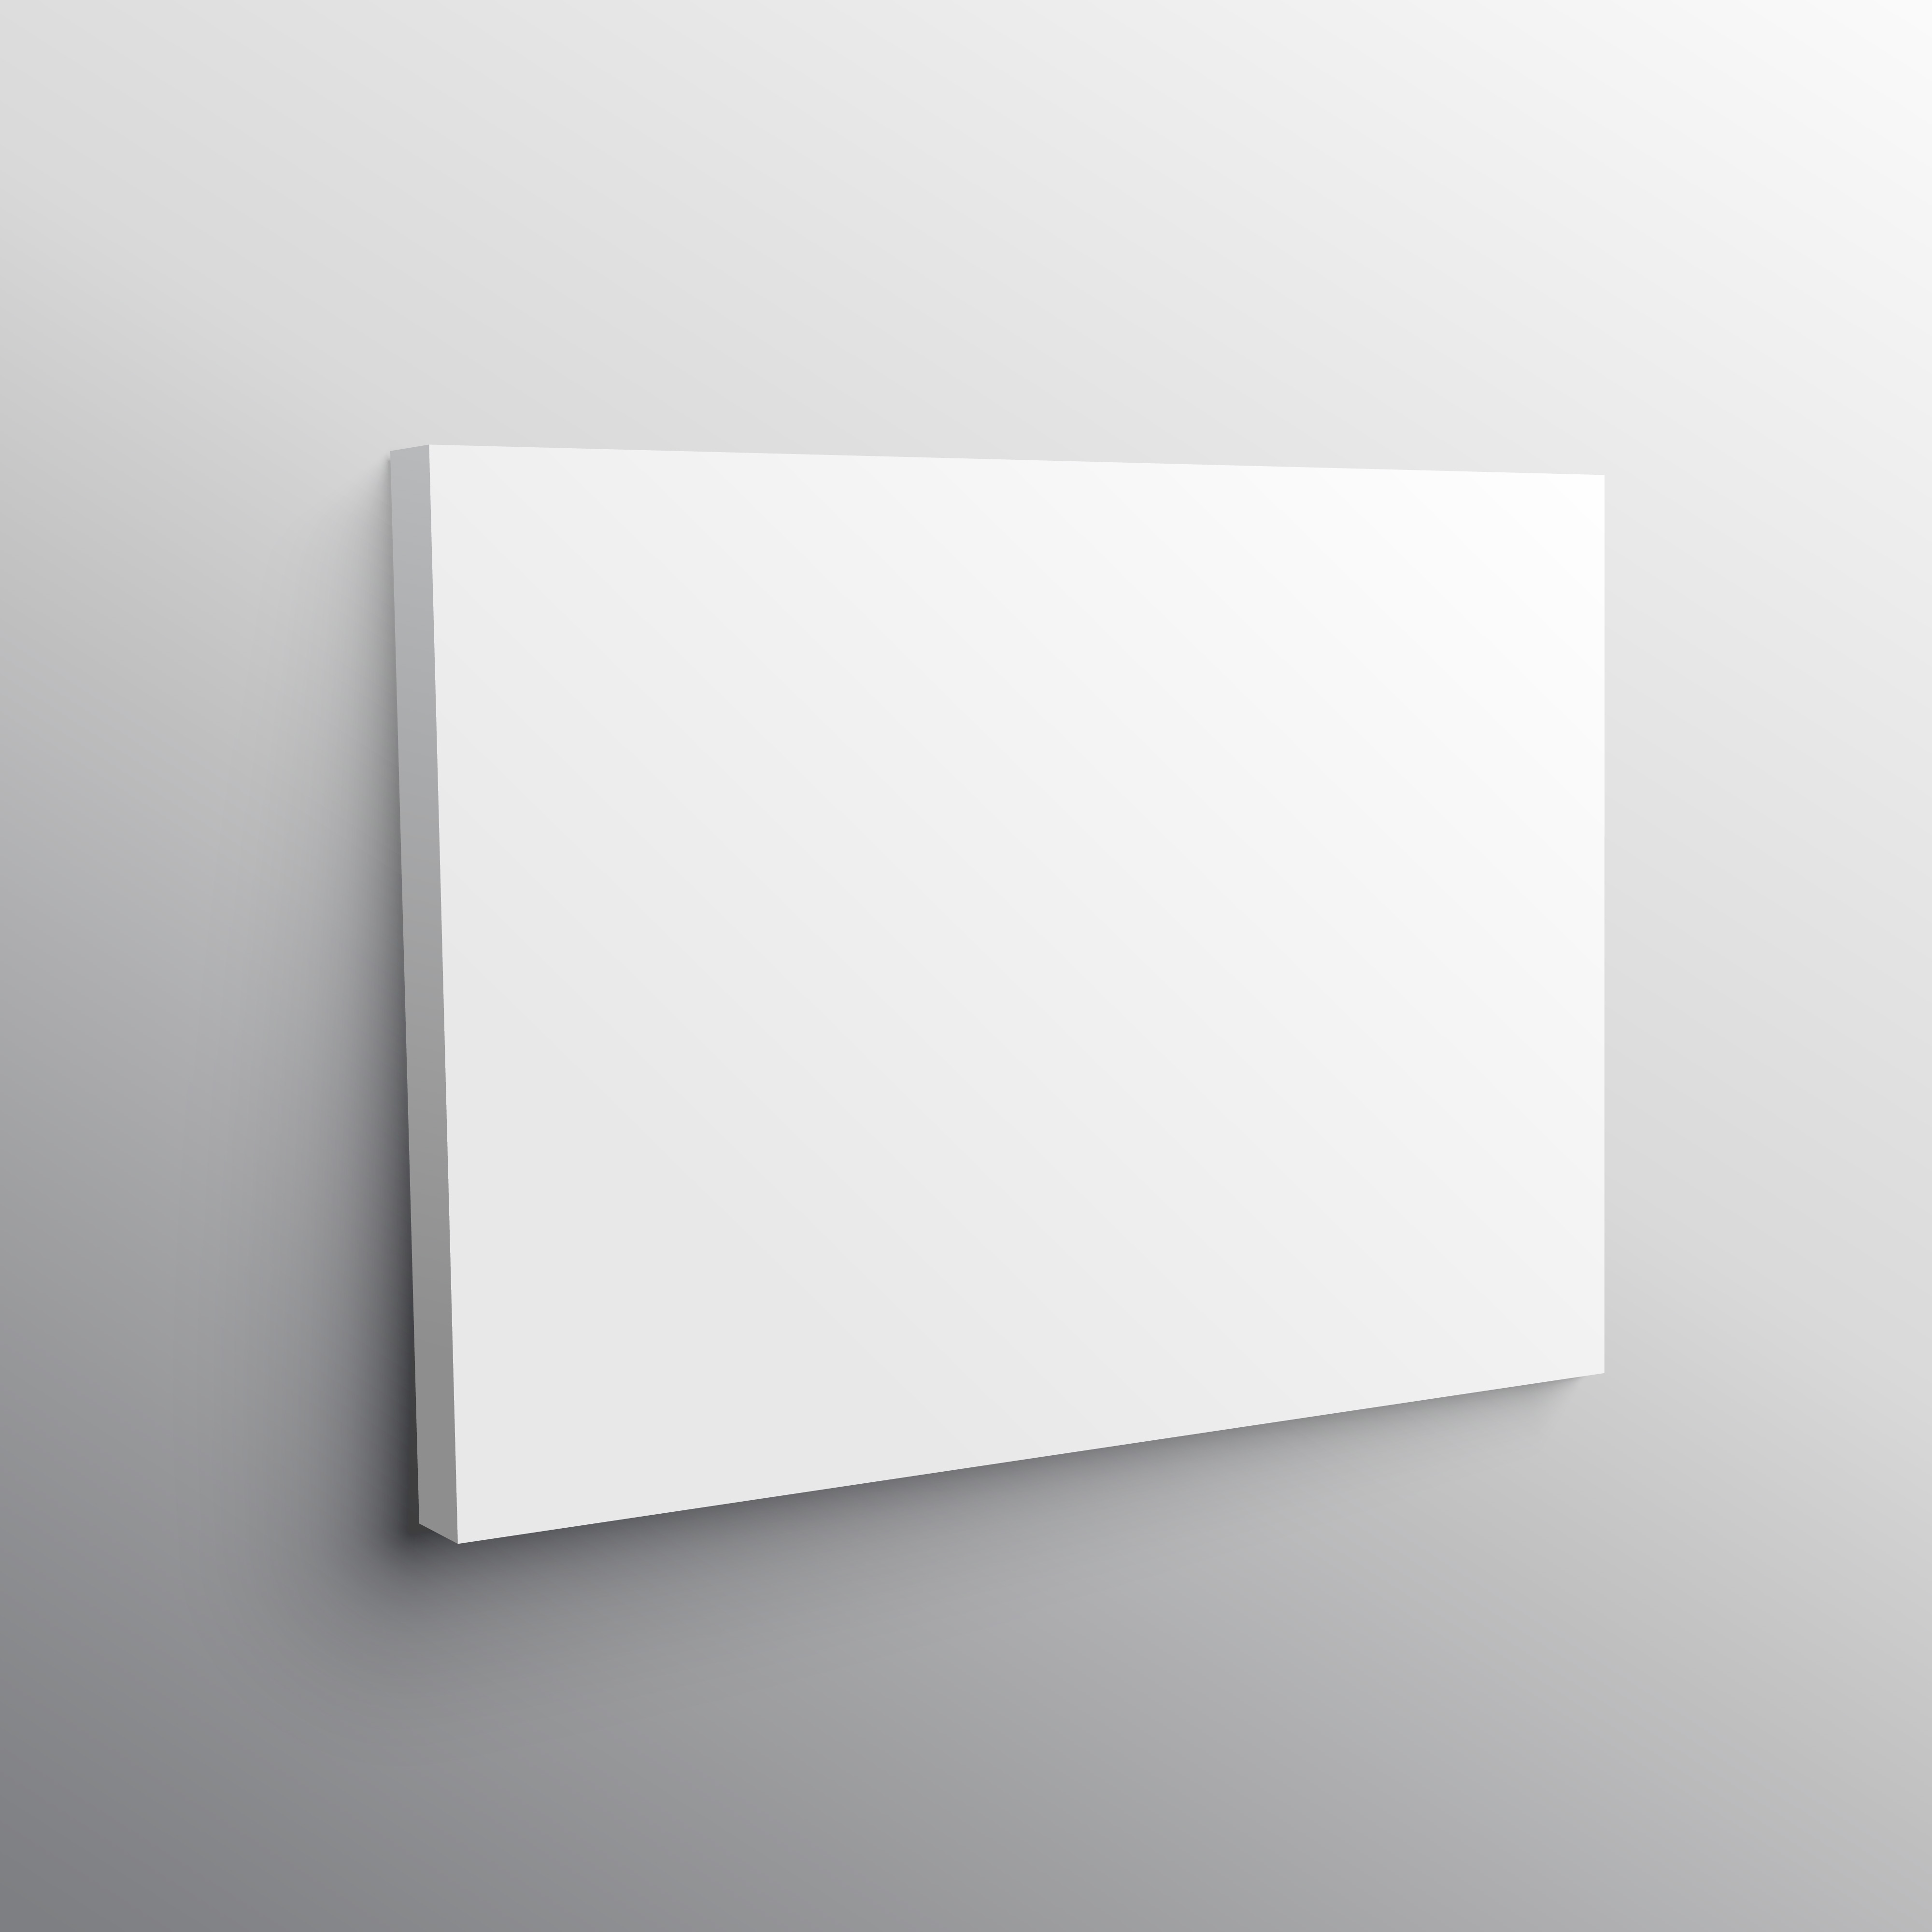 Download empty wall canvas display mockup vector - Download Free ...